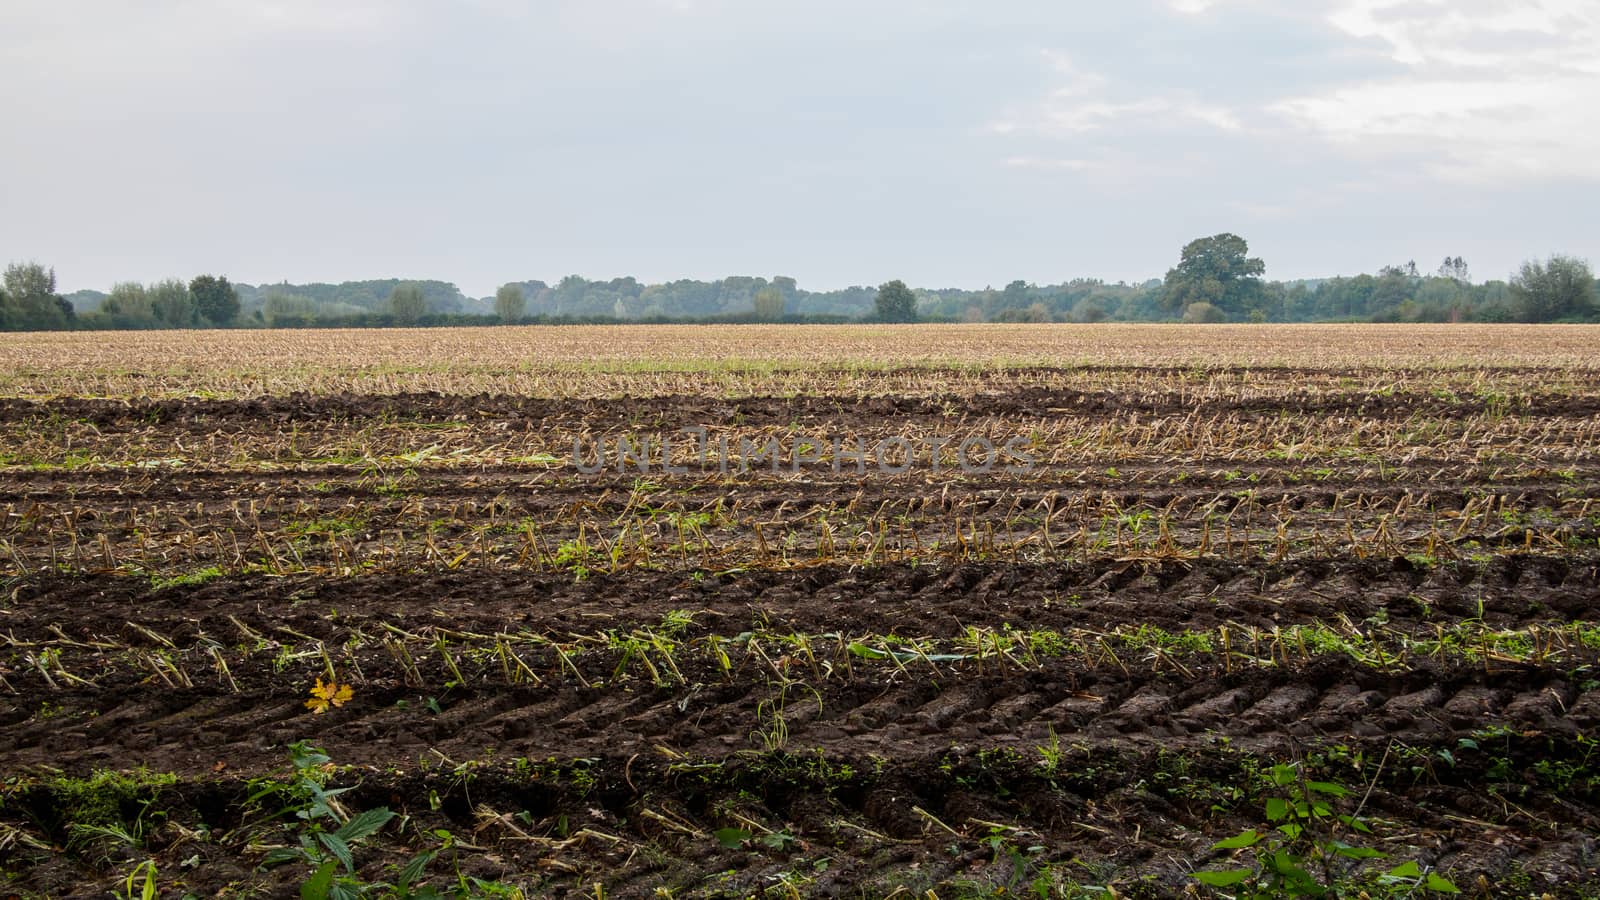 Harvested maize field by frankhoekzema